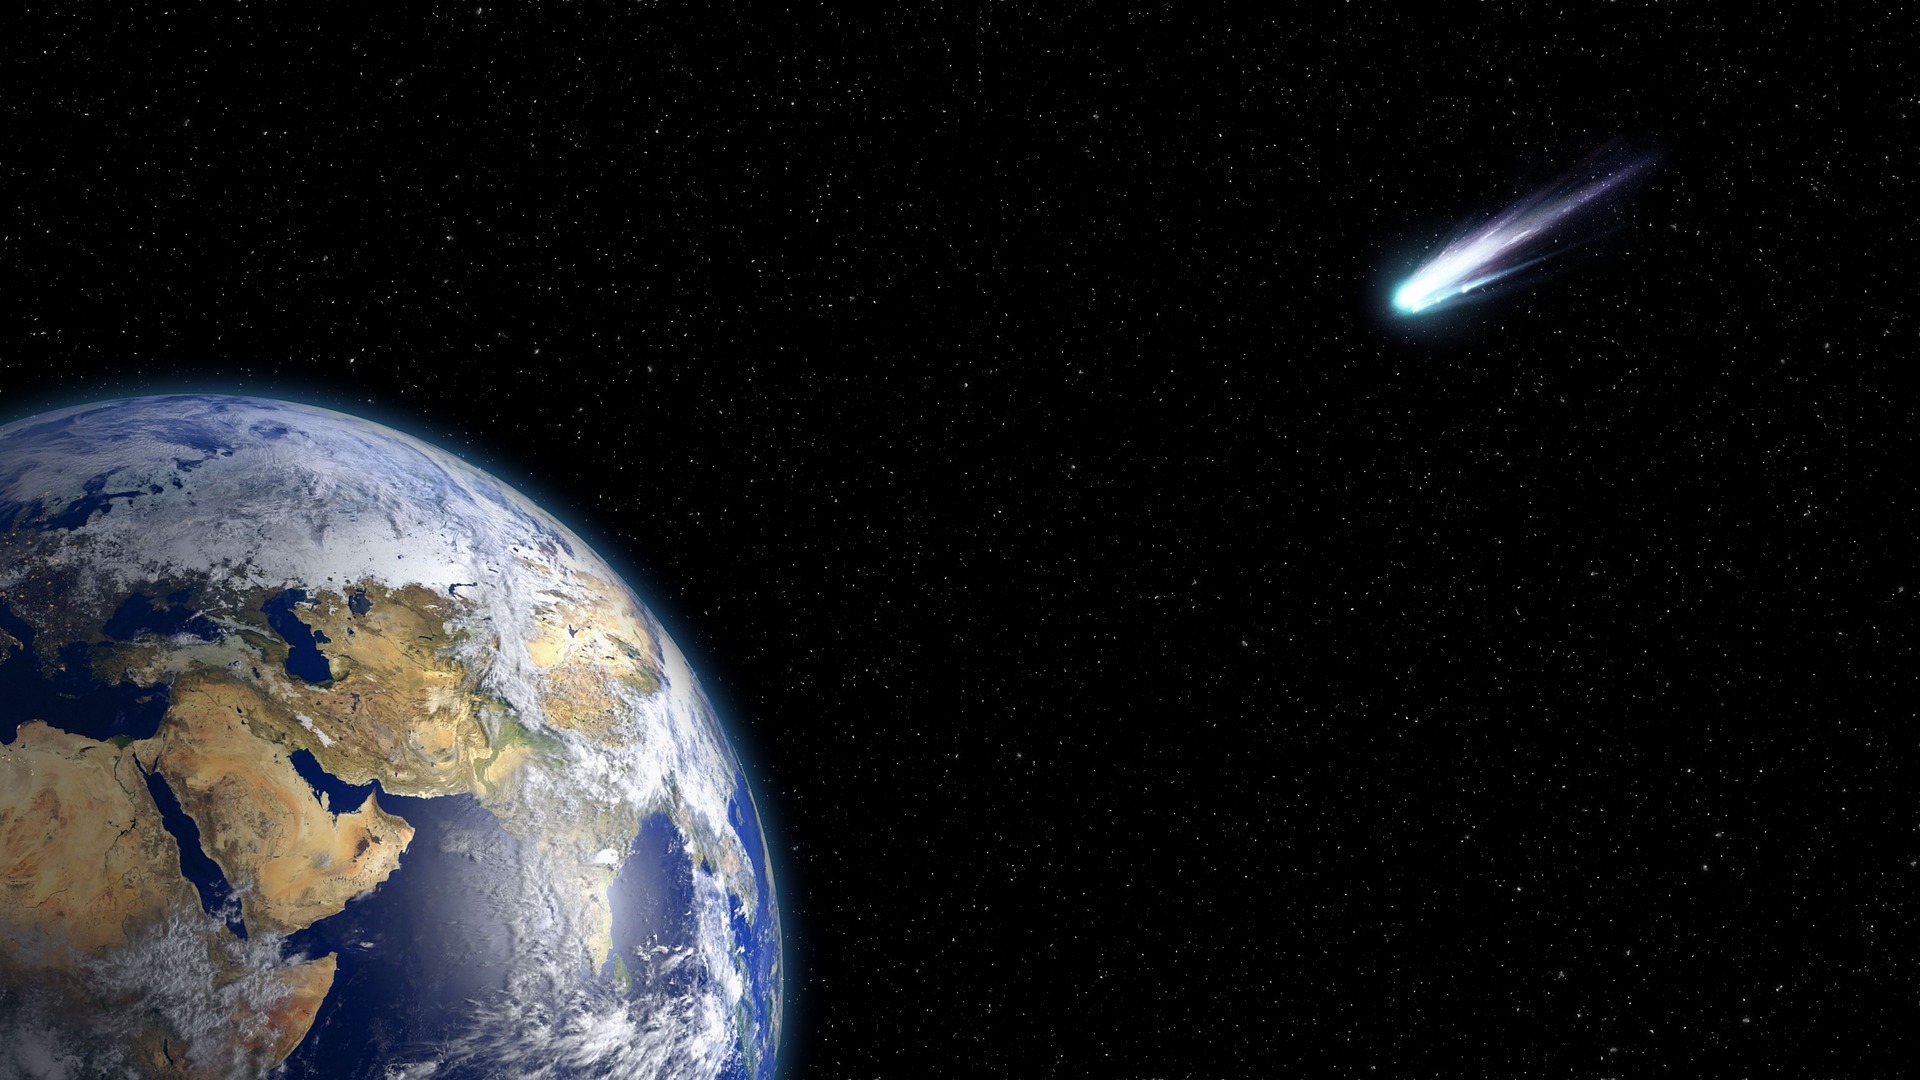 Artist's rendering of a comet headed towards Earth.